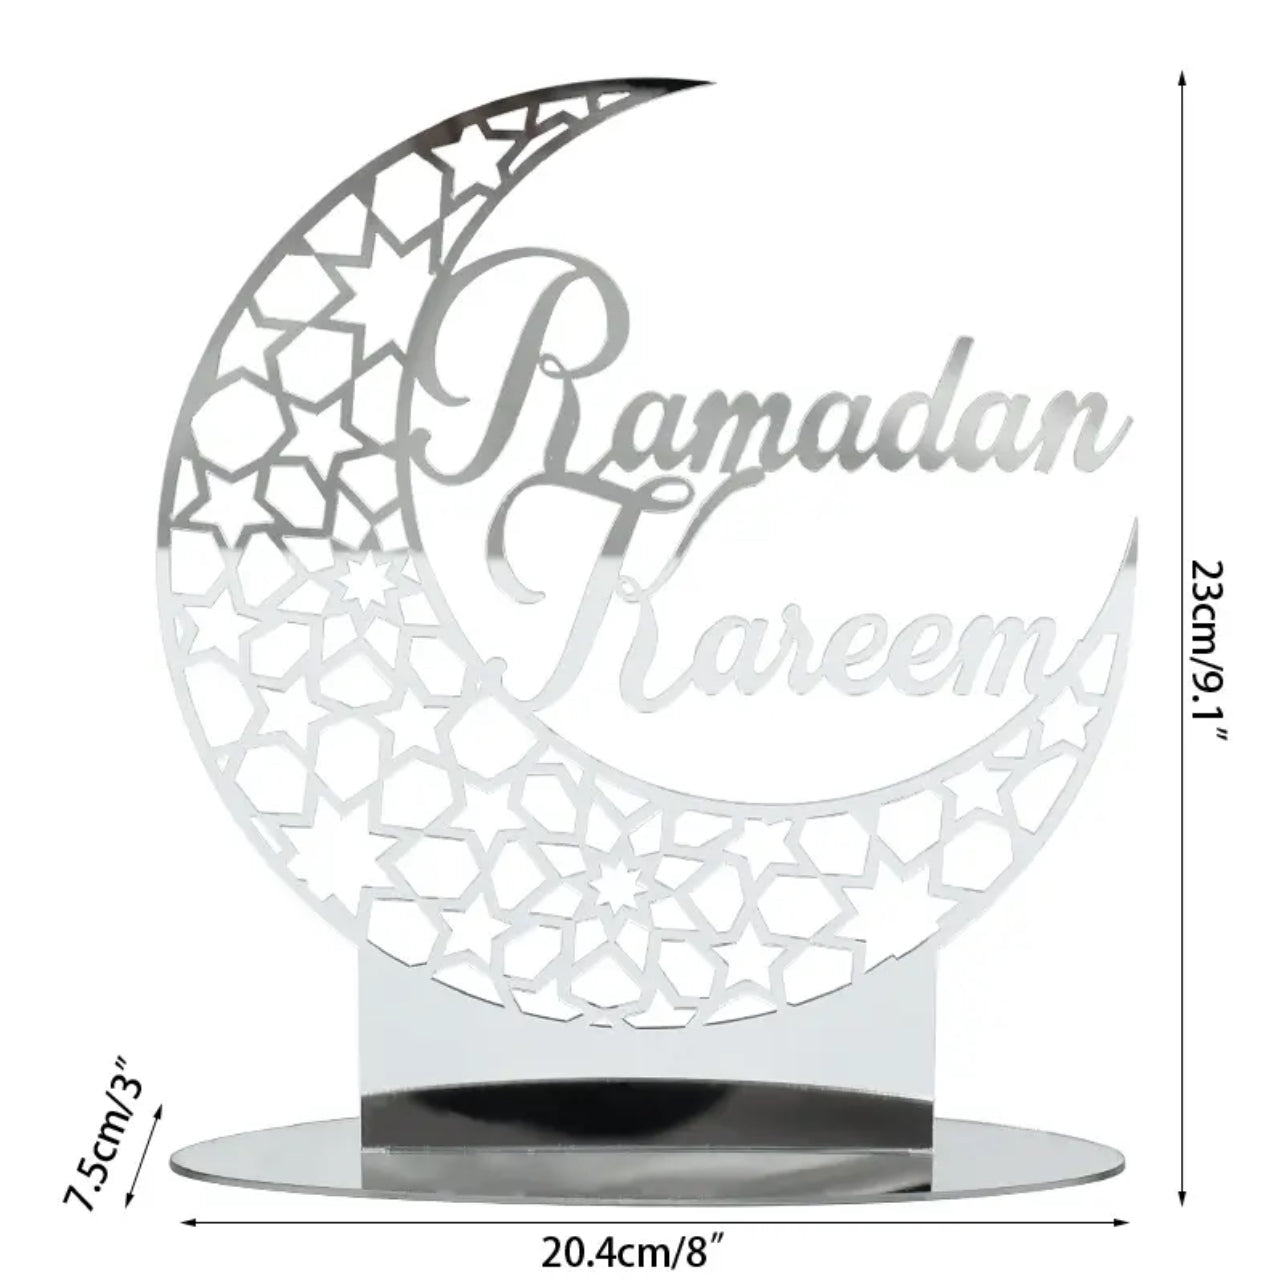 Ramadan and Eid Table Ornaments.